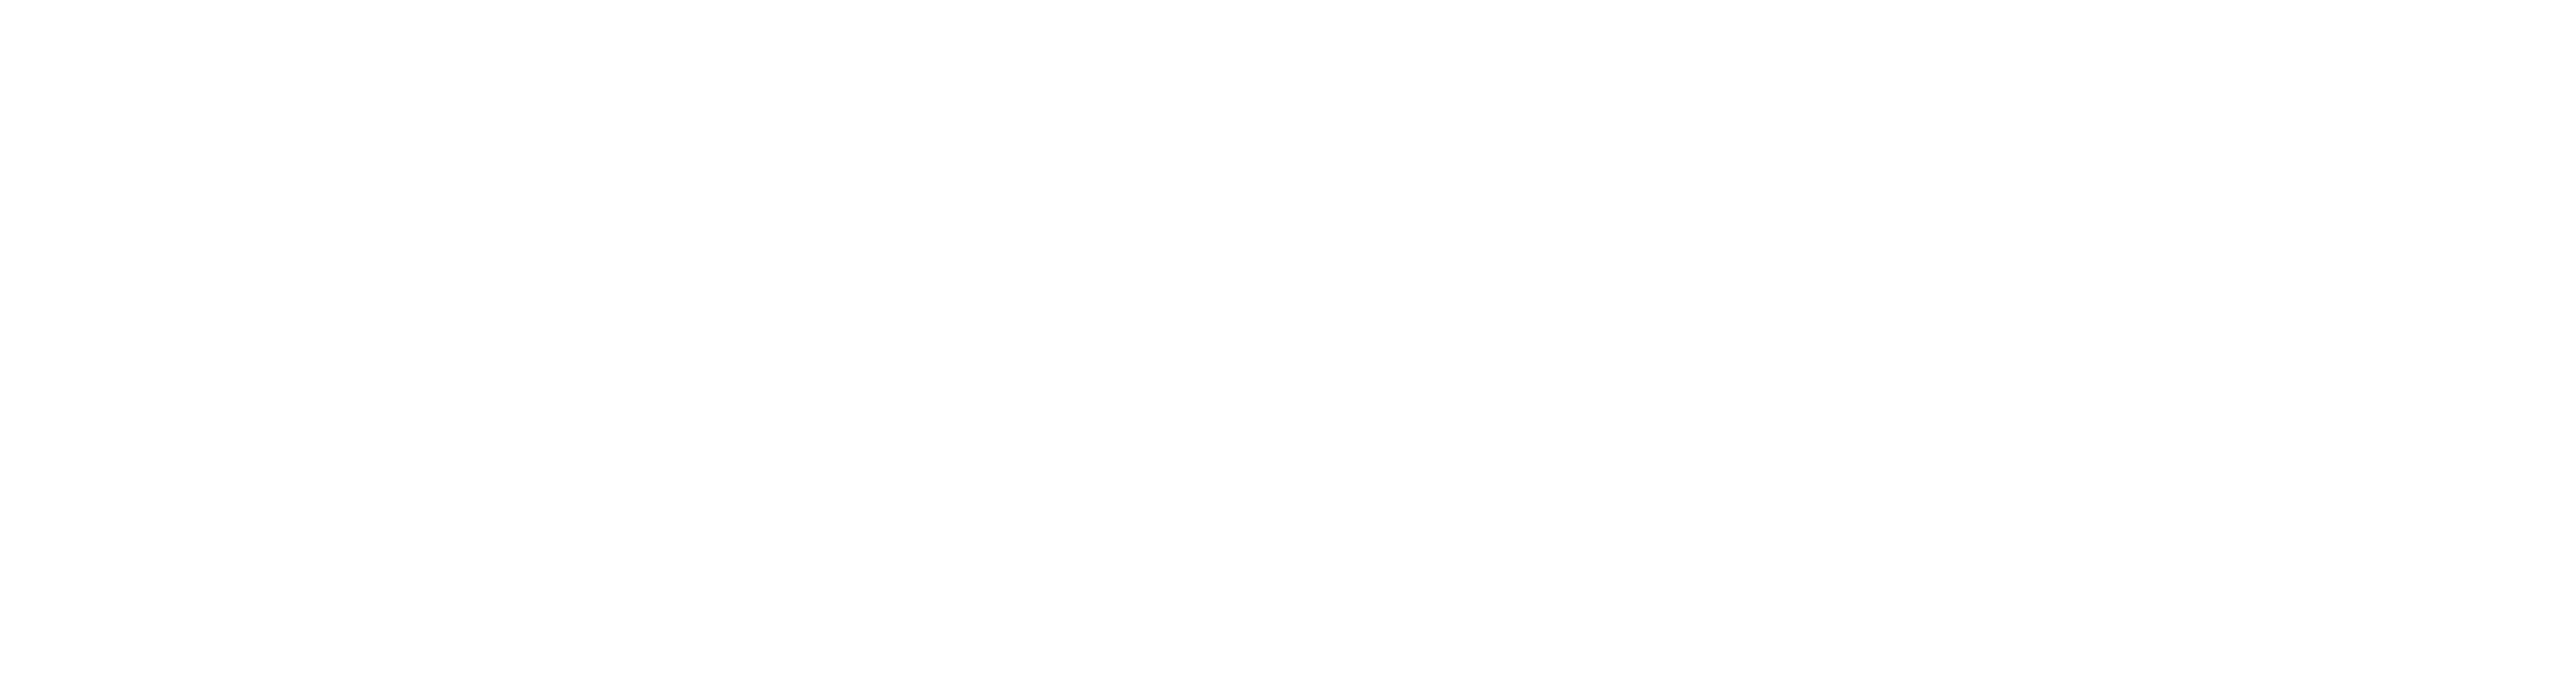 3D Robotik